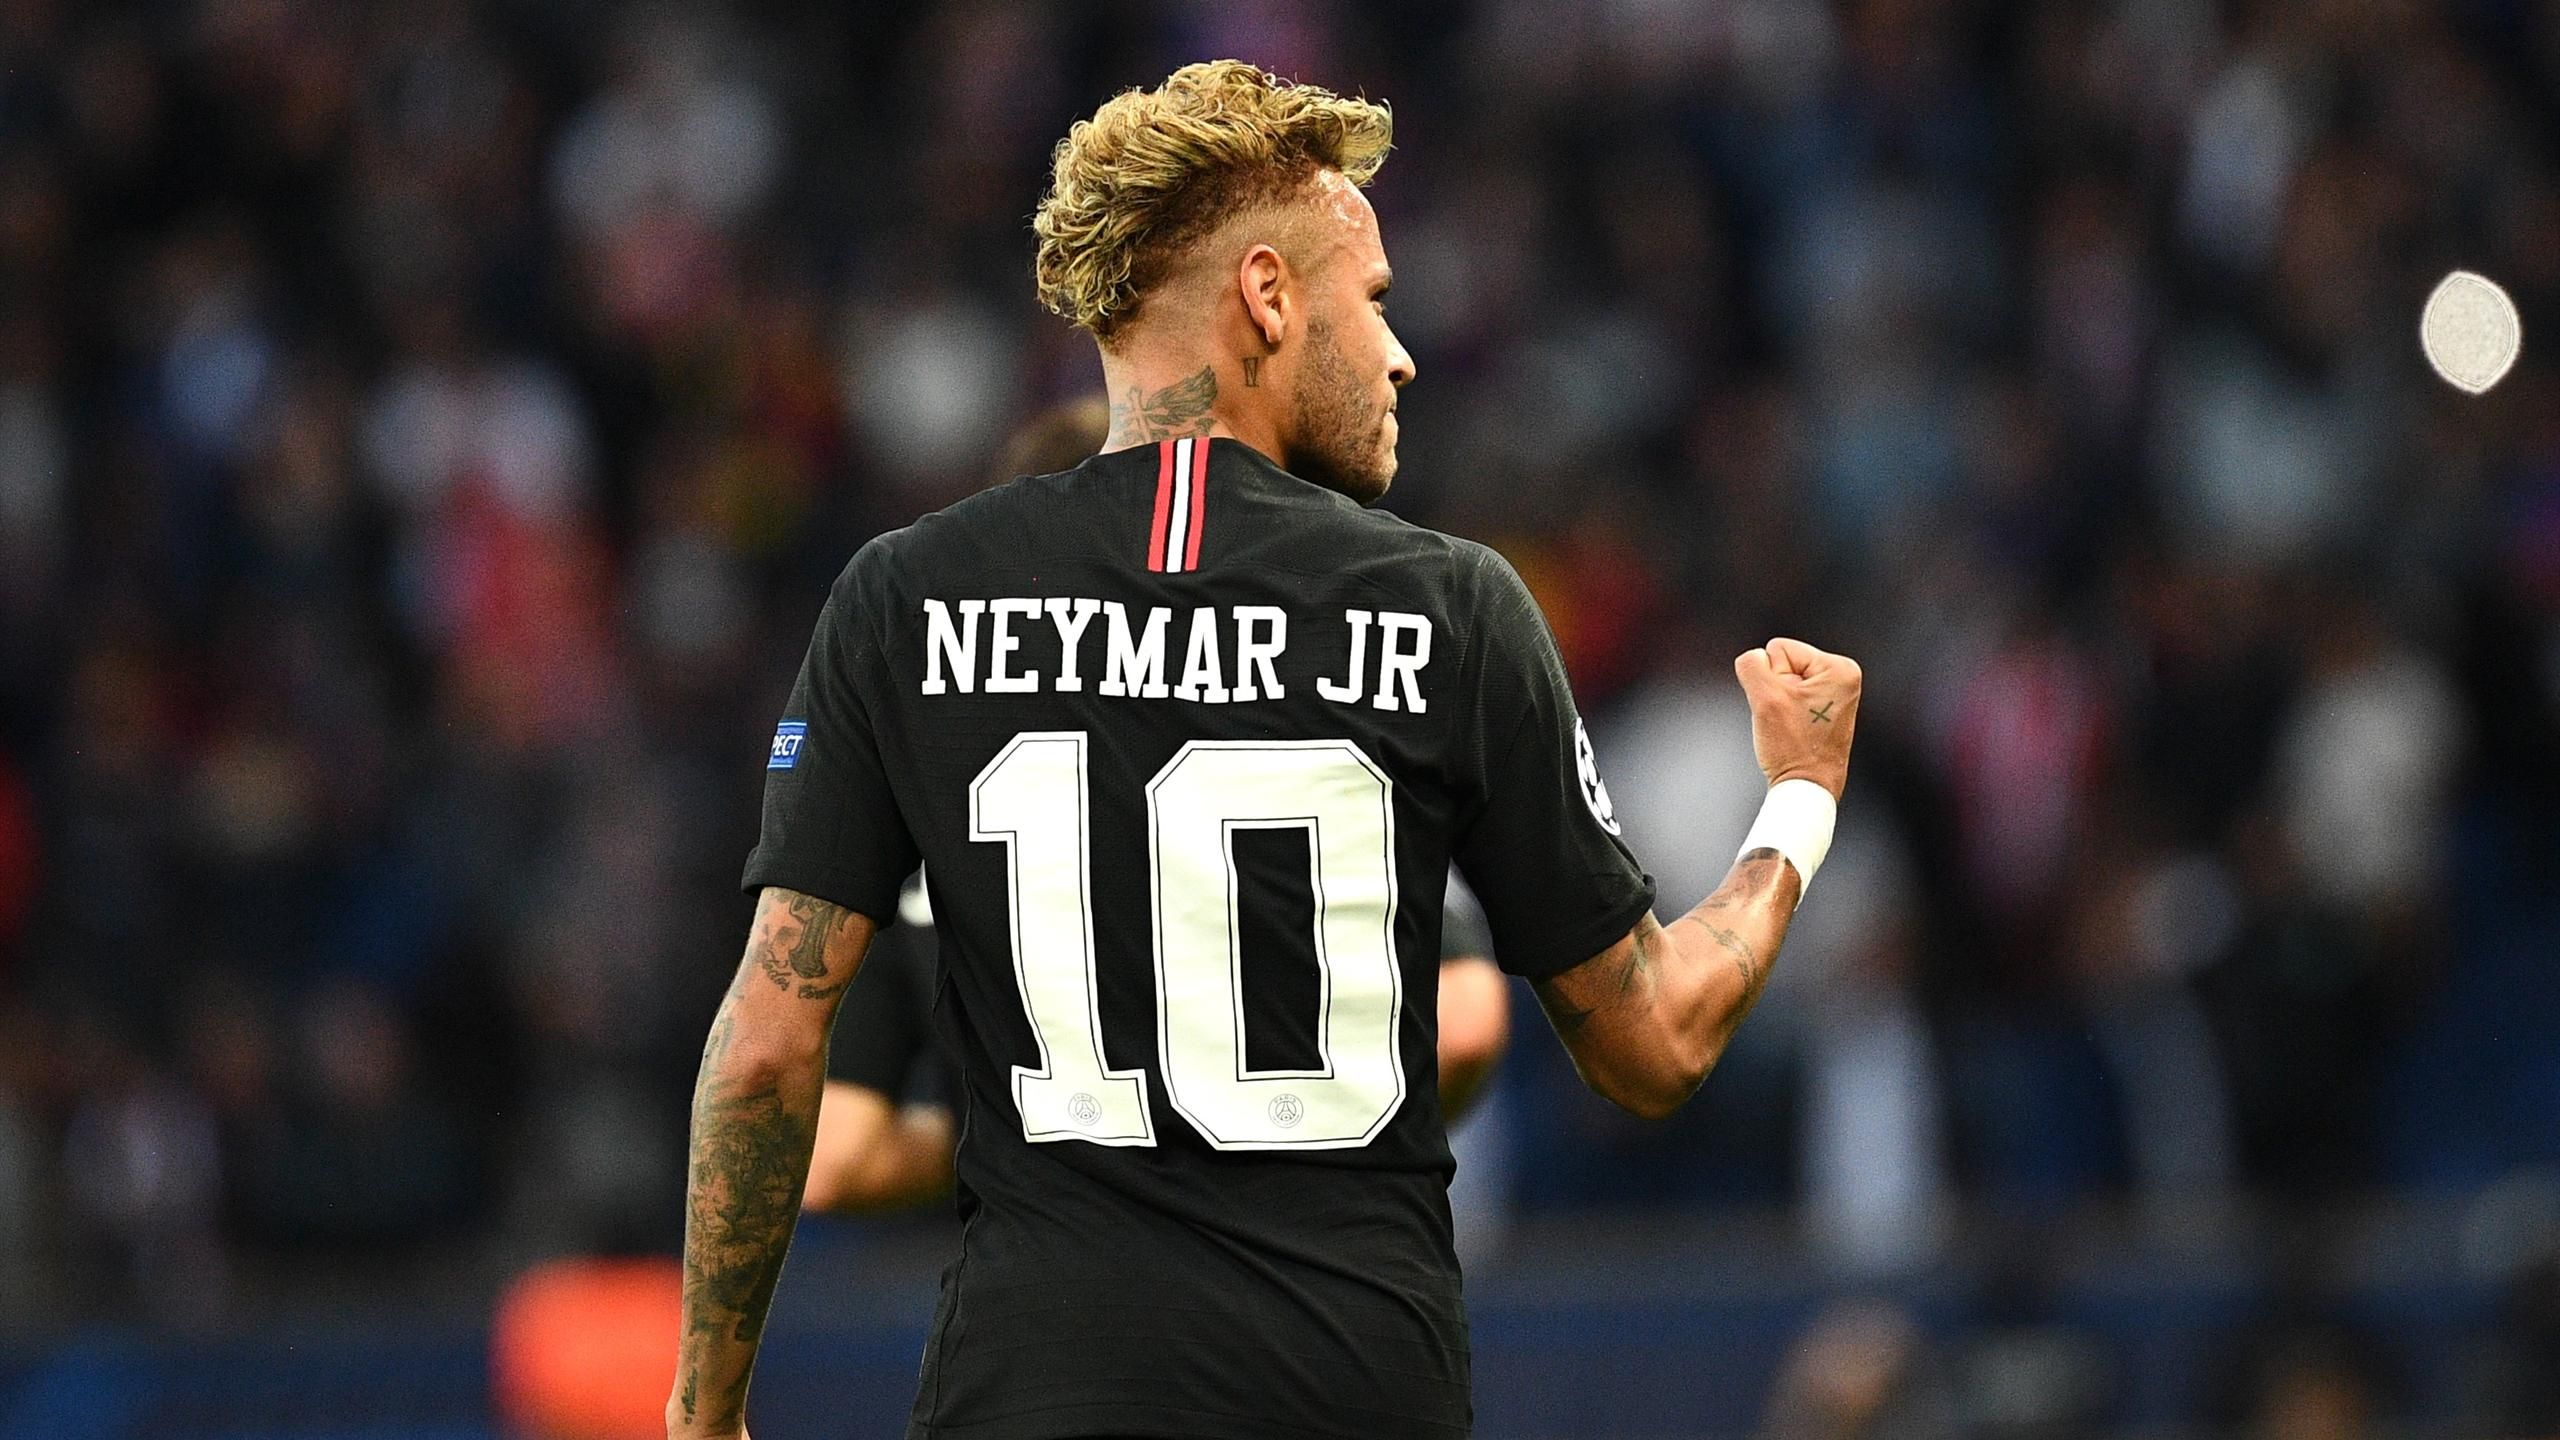 Football news - WATCH Neymar opens scoring for PSG with delightful free-kick 